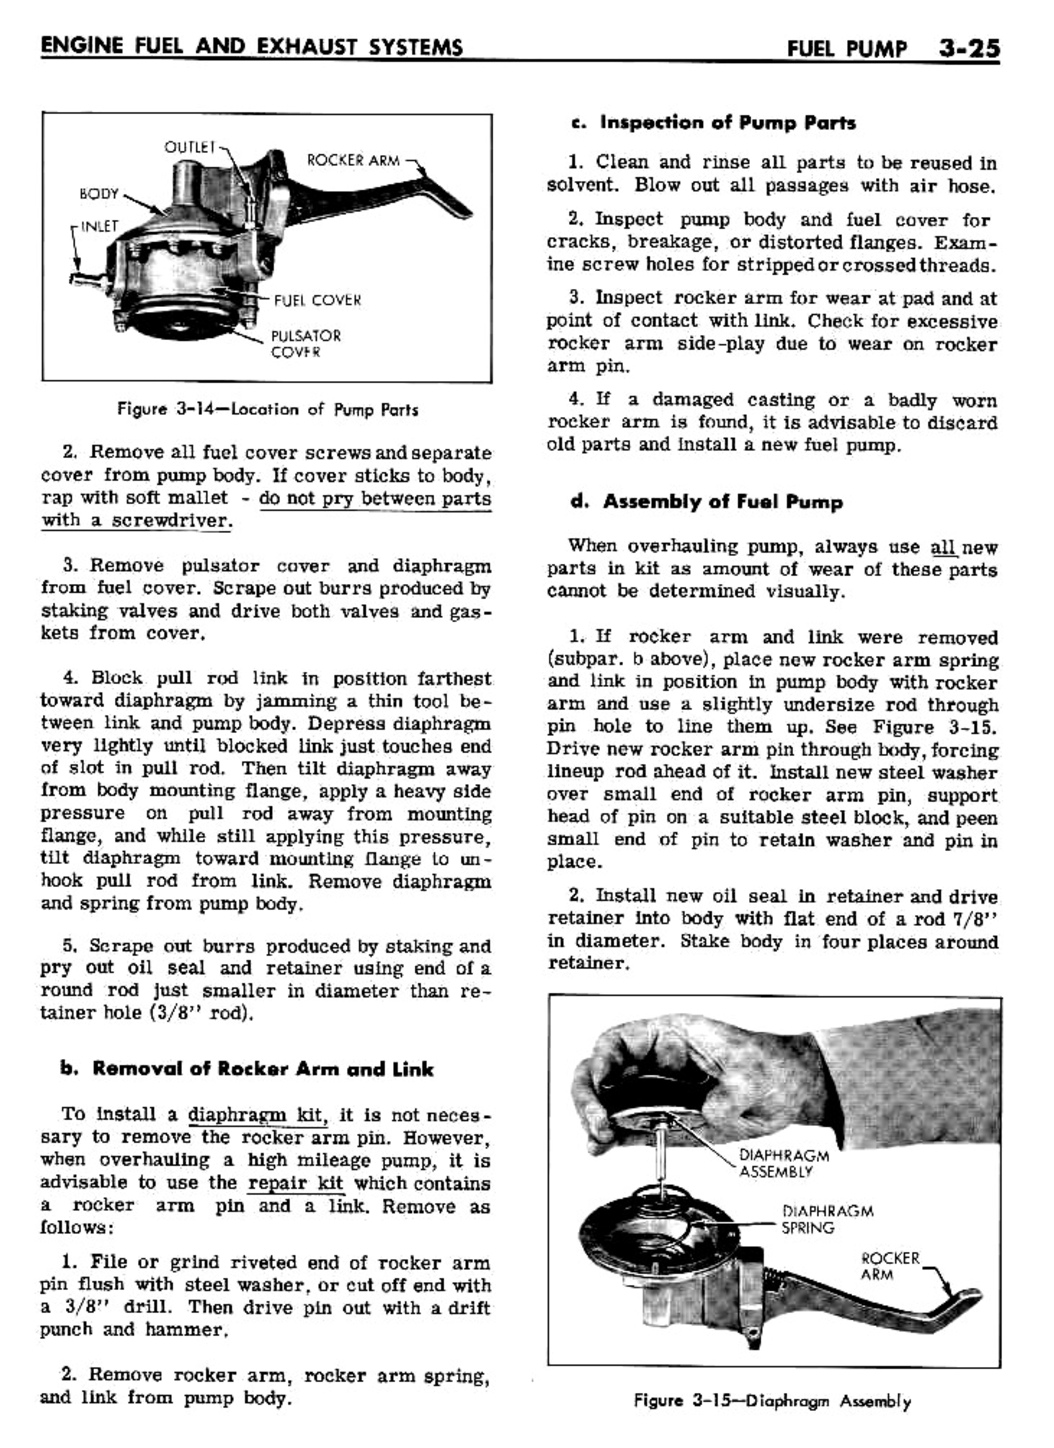 n_04 1961 Buick Shop Manual - Engine Fuel & Exhaust-025-025.jpg